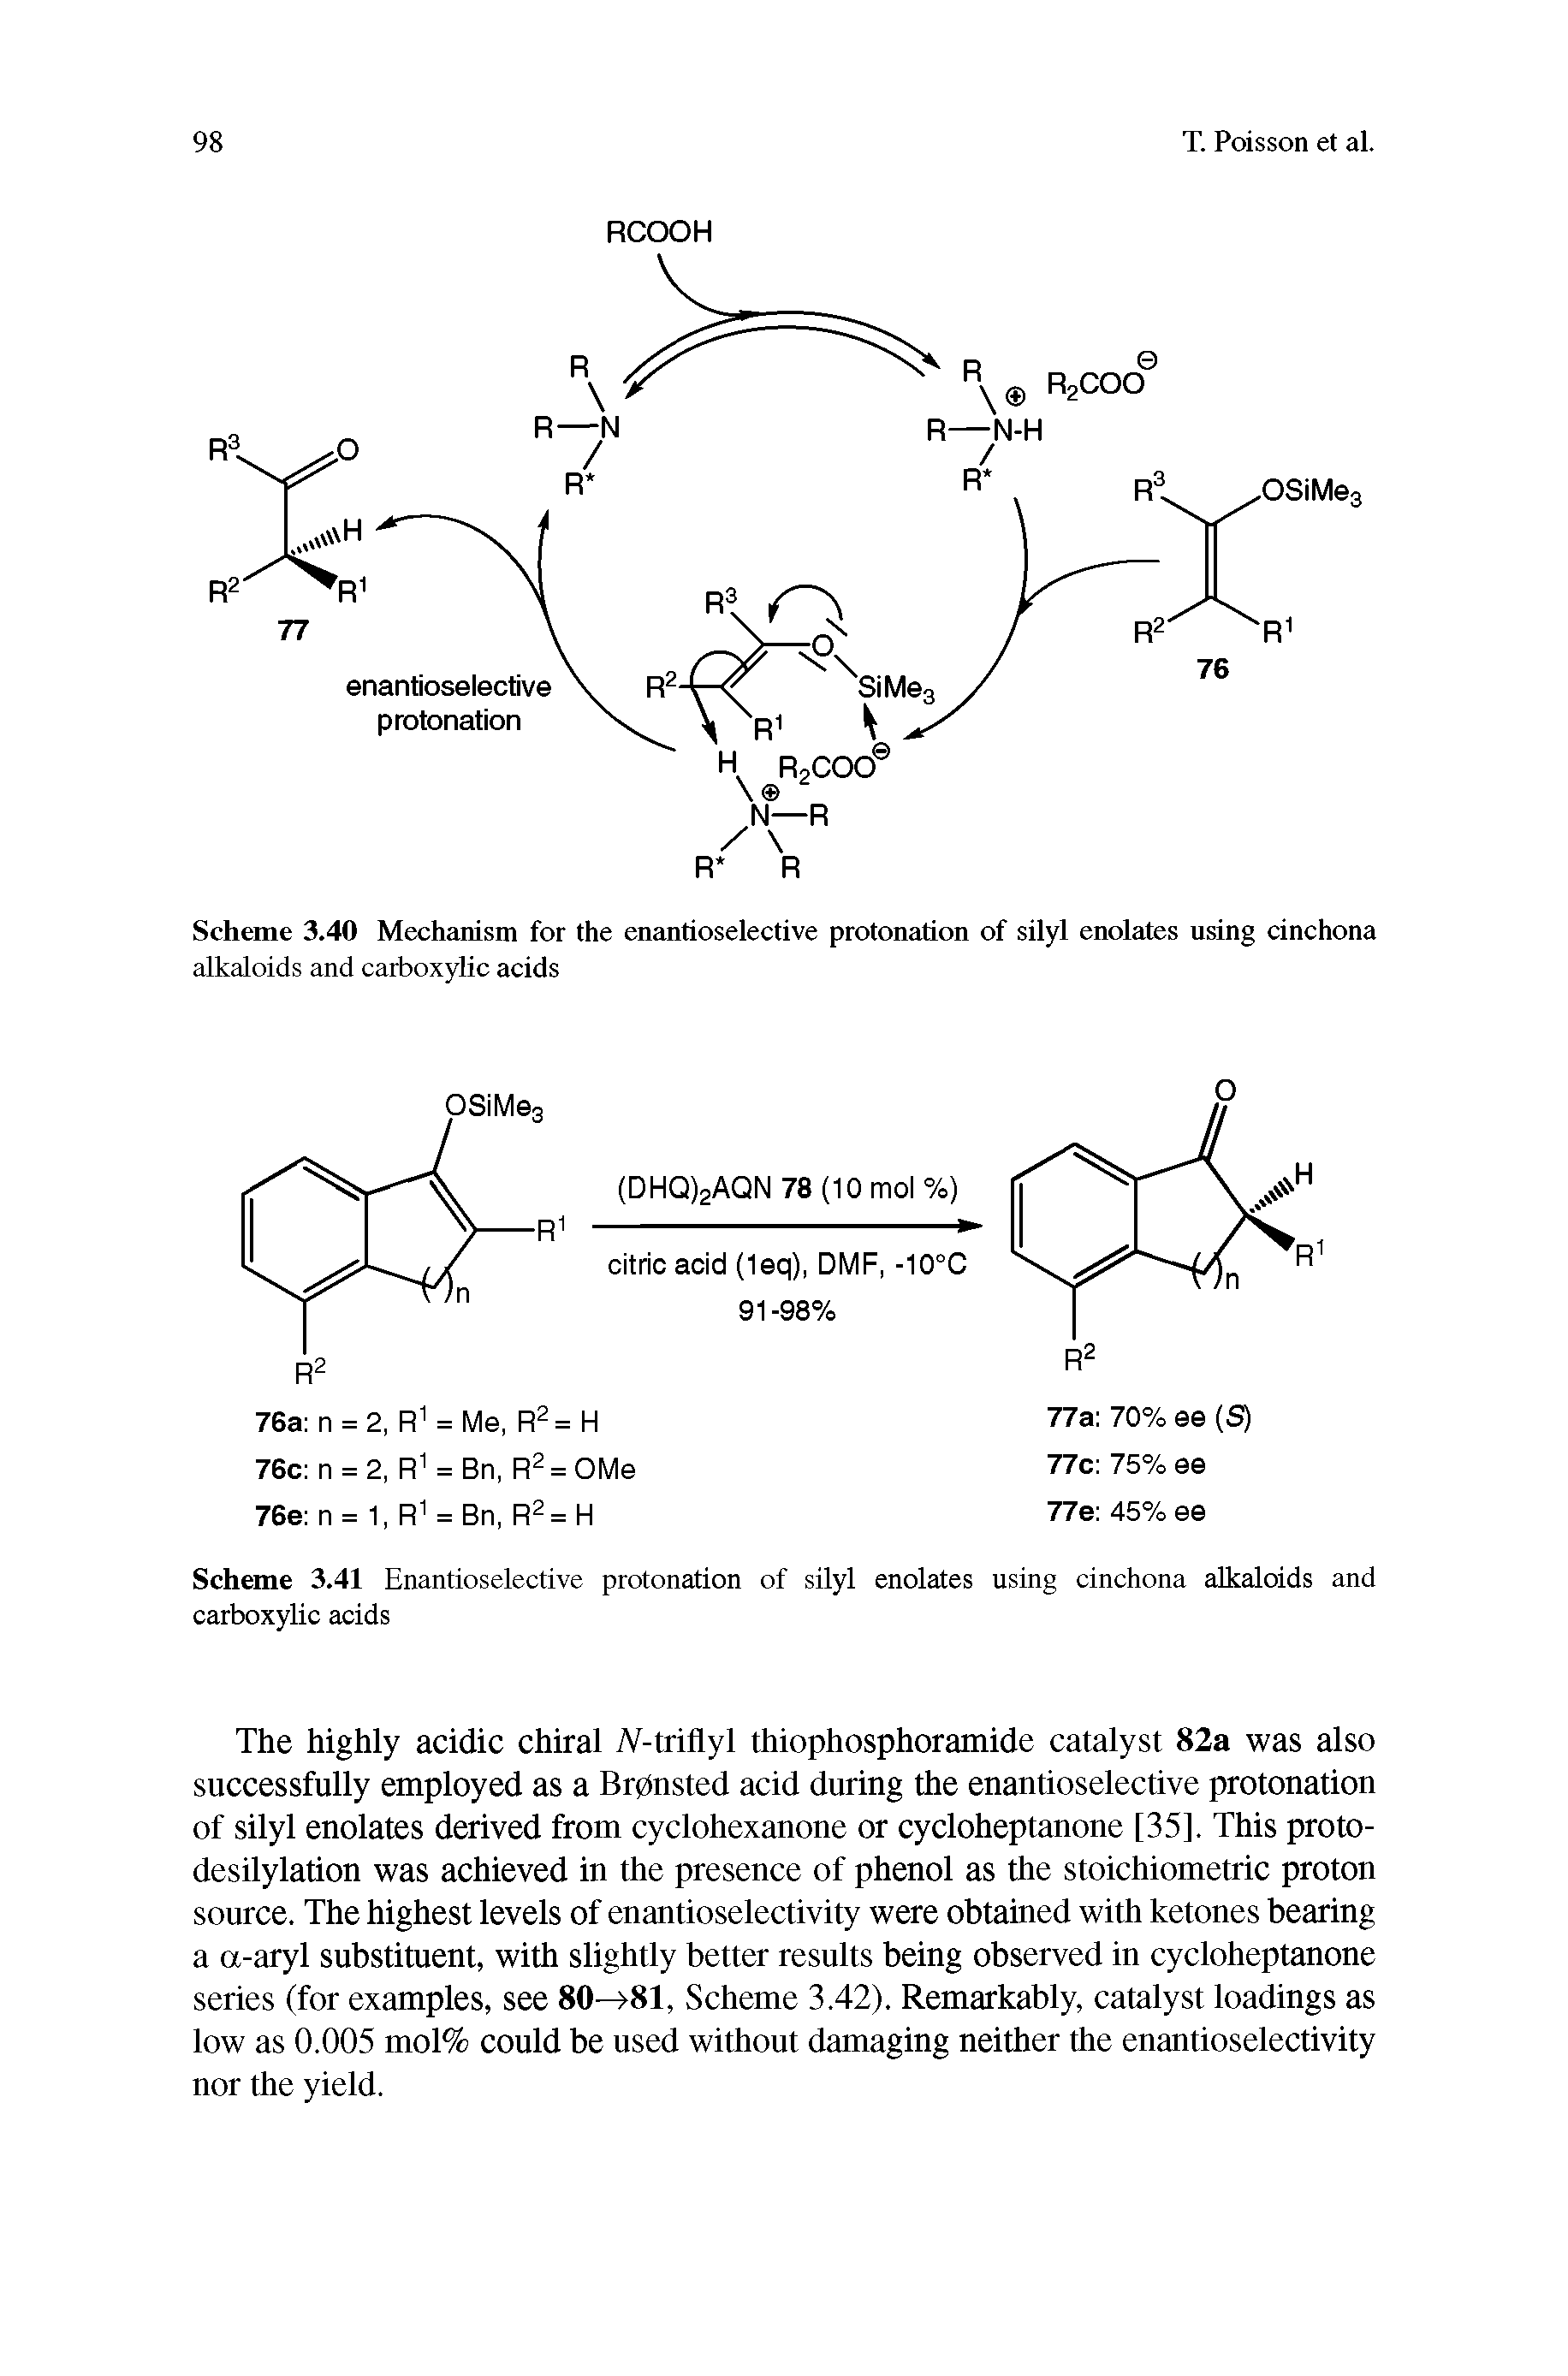 Scheme 3.40 Mechanism for the enantioselective protonation of silyl enolates using cinchona alkaloids and carboxylic acids...